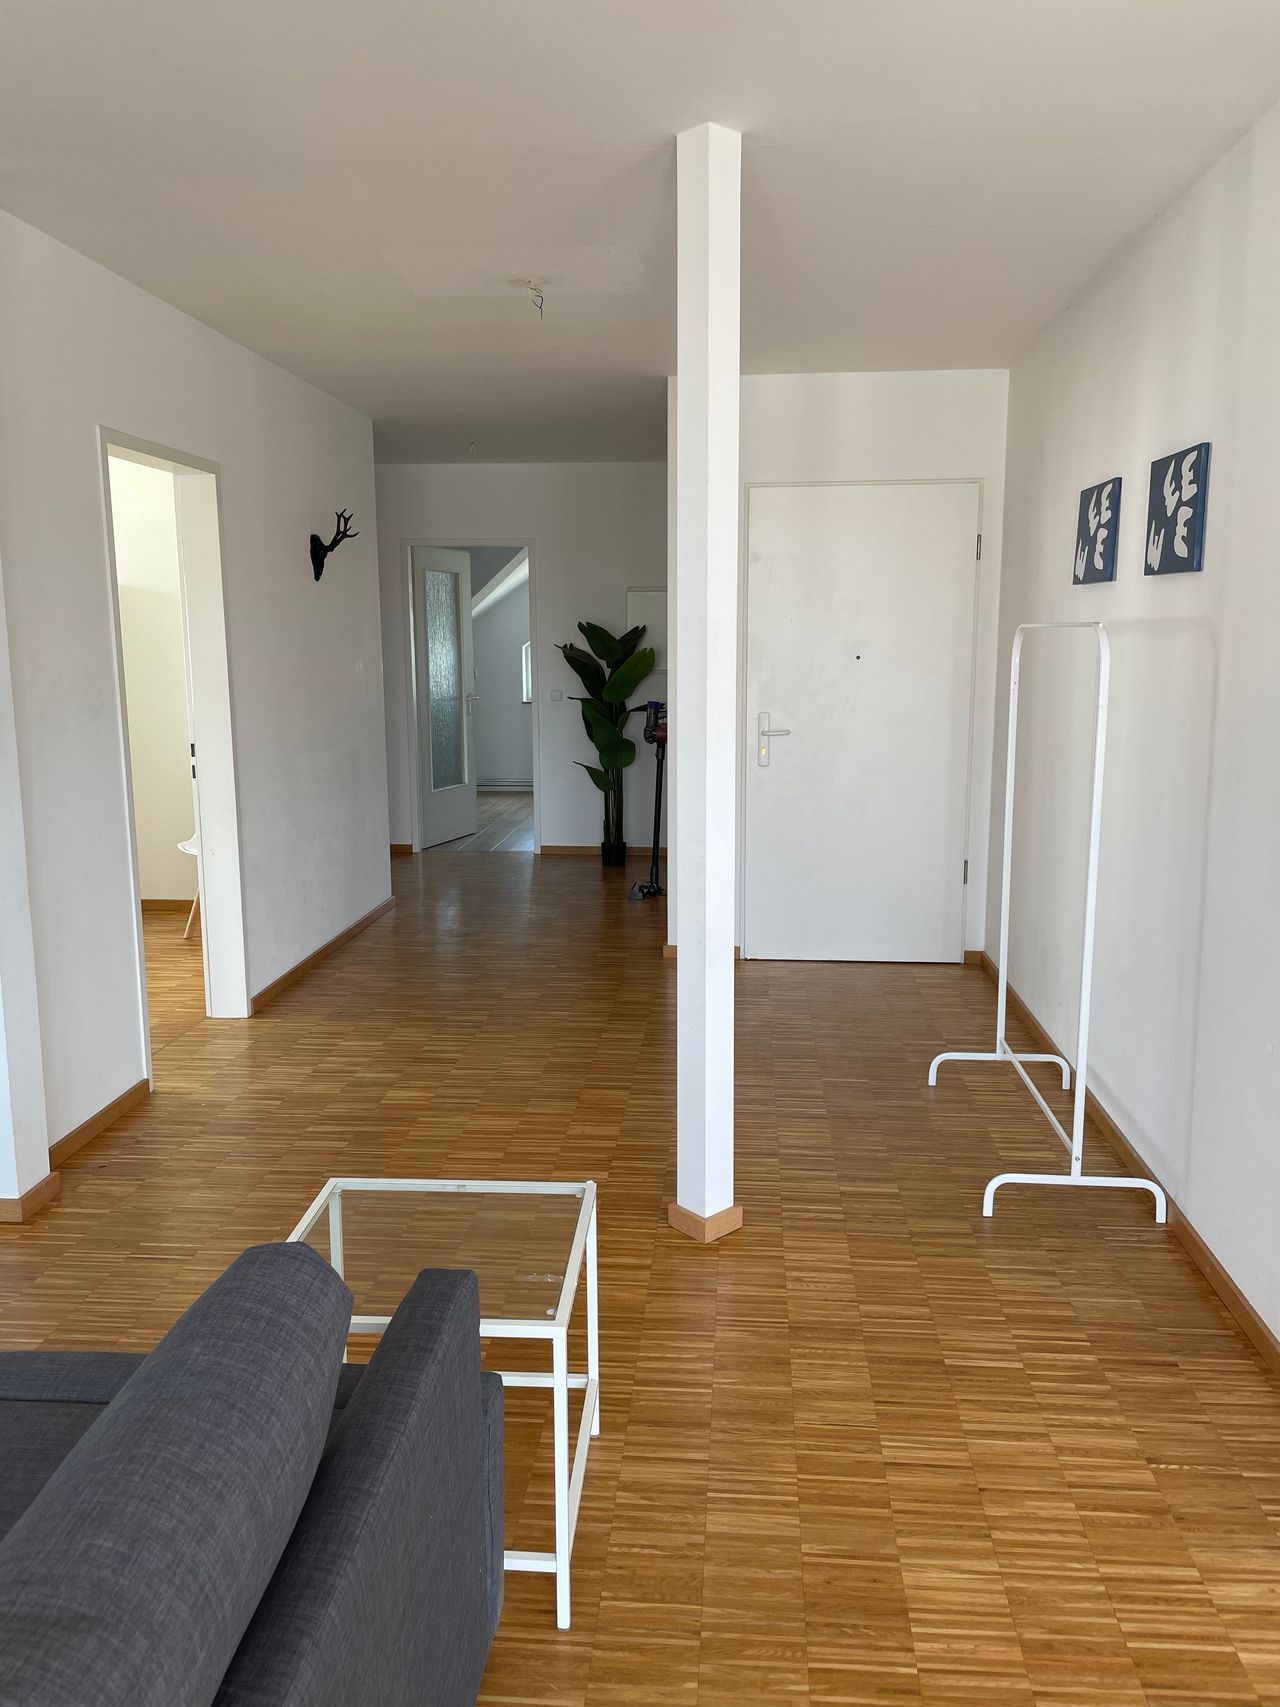 5-room terrace apartment in Berlin